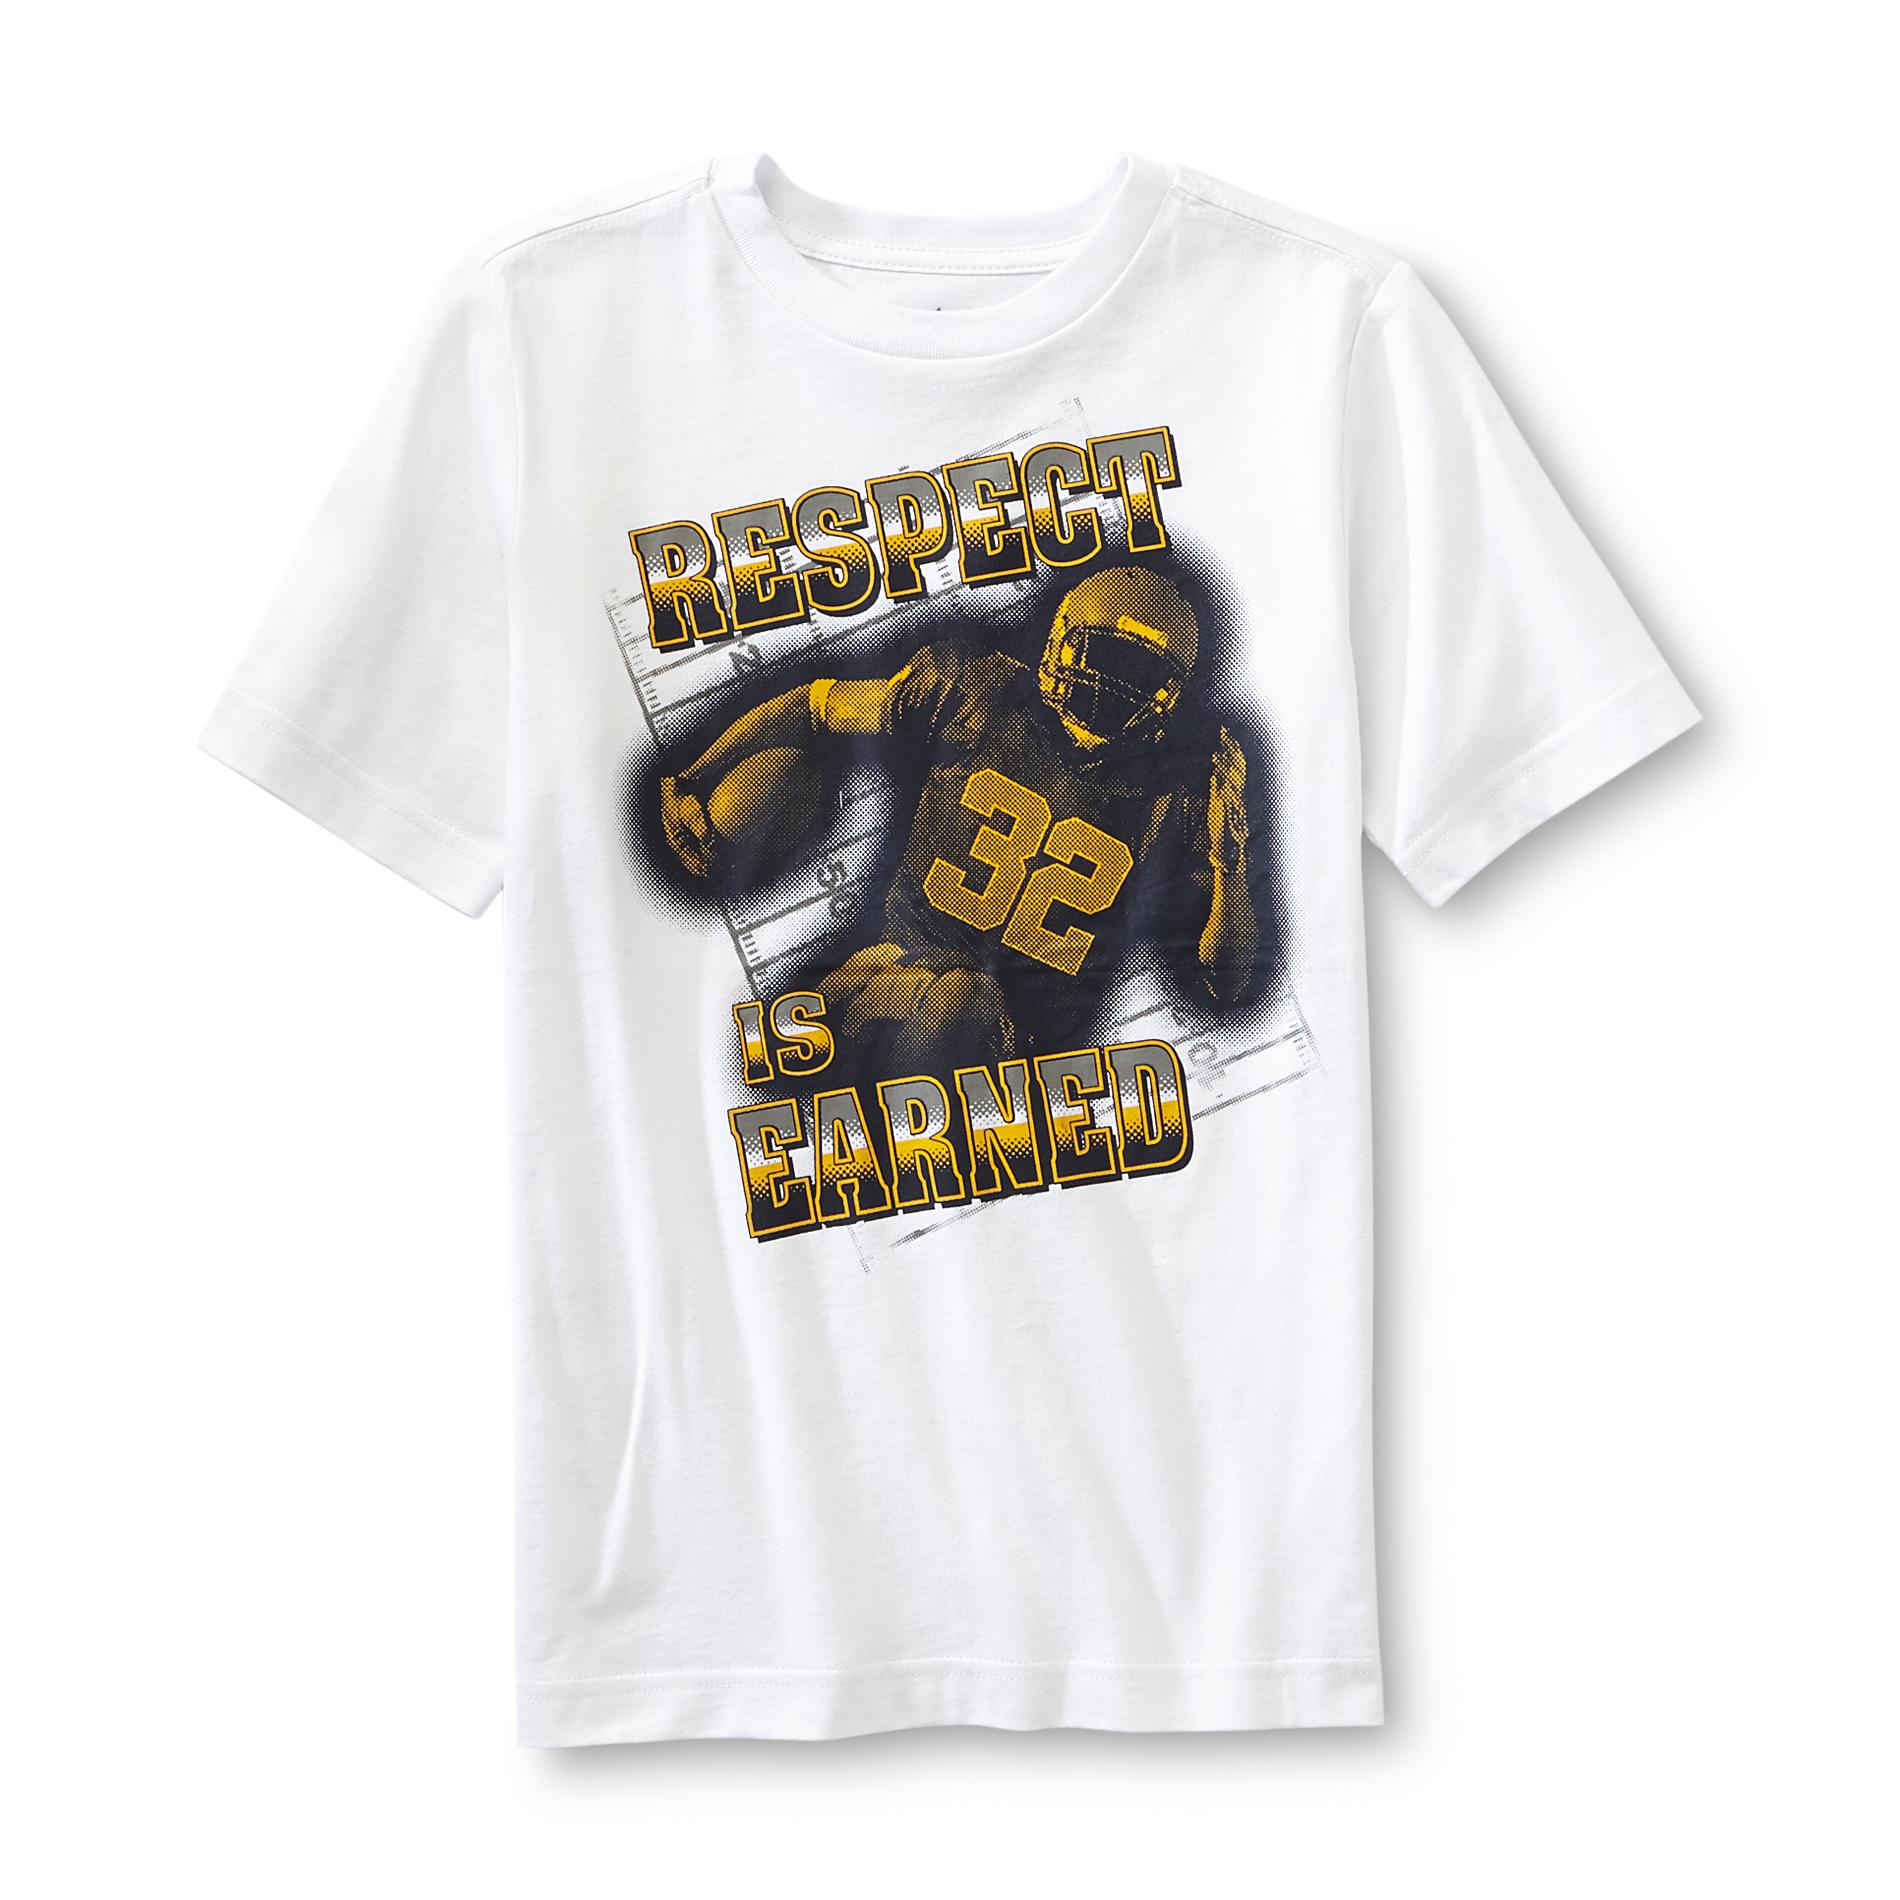 Athletech Boy's Graphic Athletic T-Shirt - Football